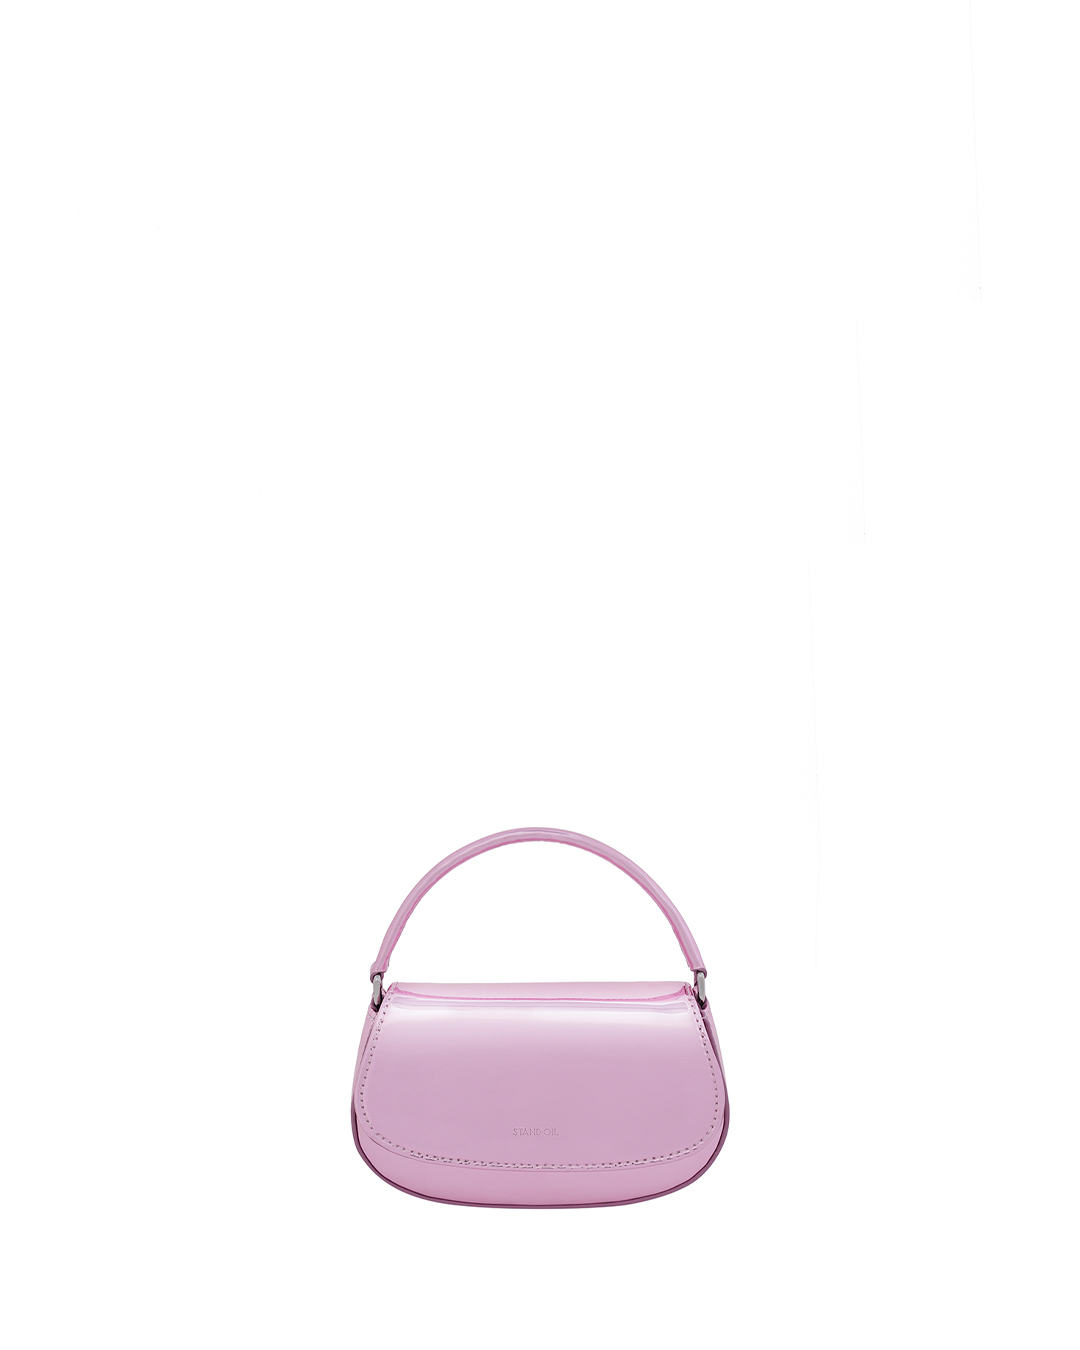 Stand Oil - Clam Bag Tiny · 클램백 티니 / 미러 핑크